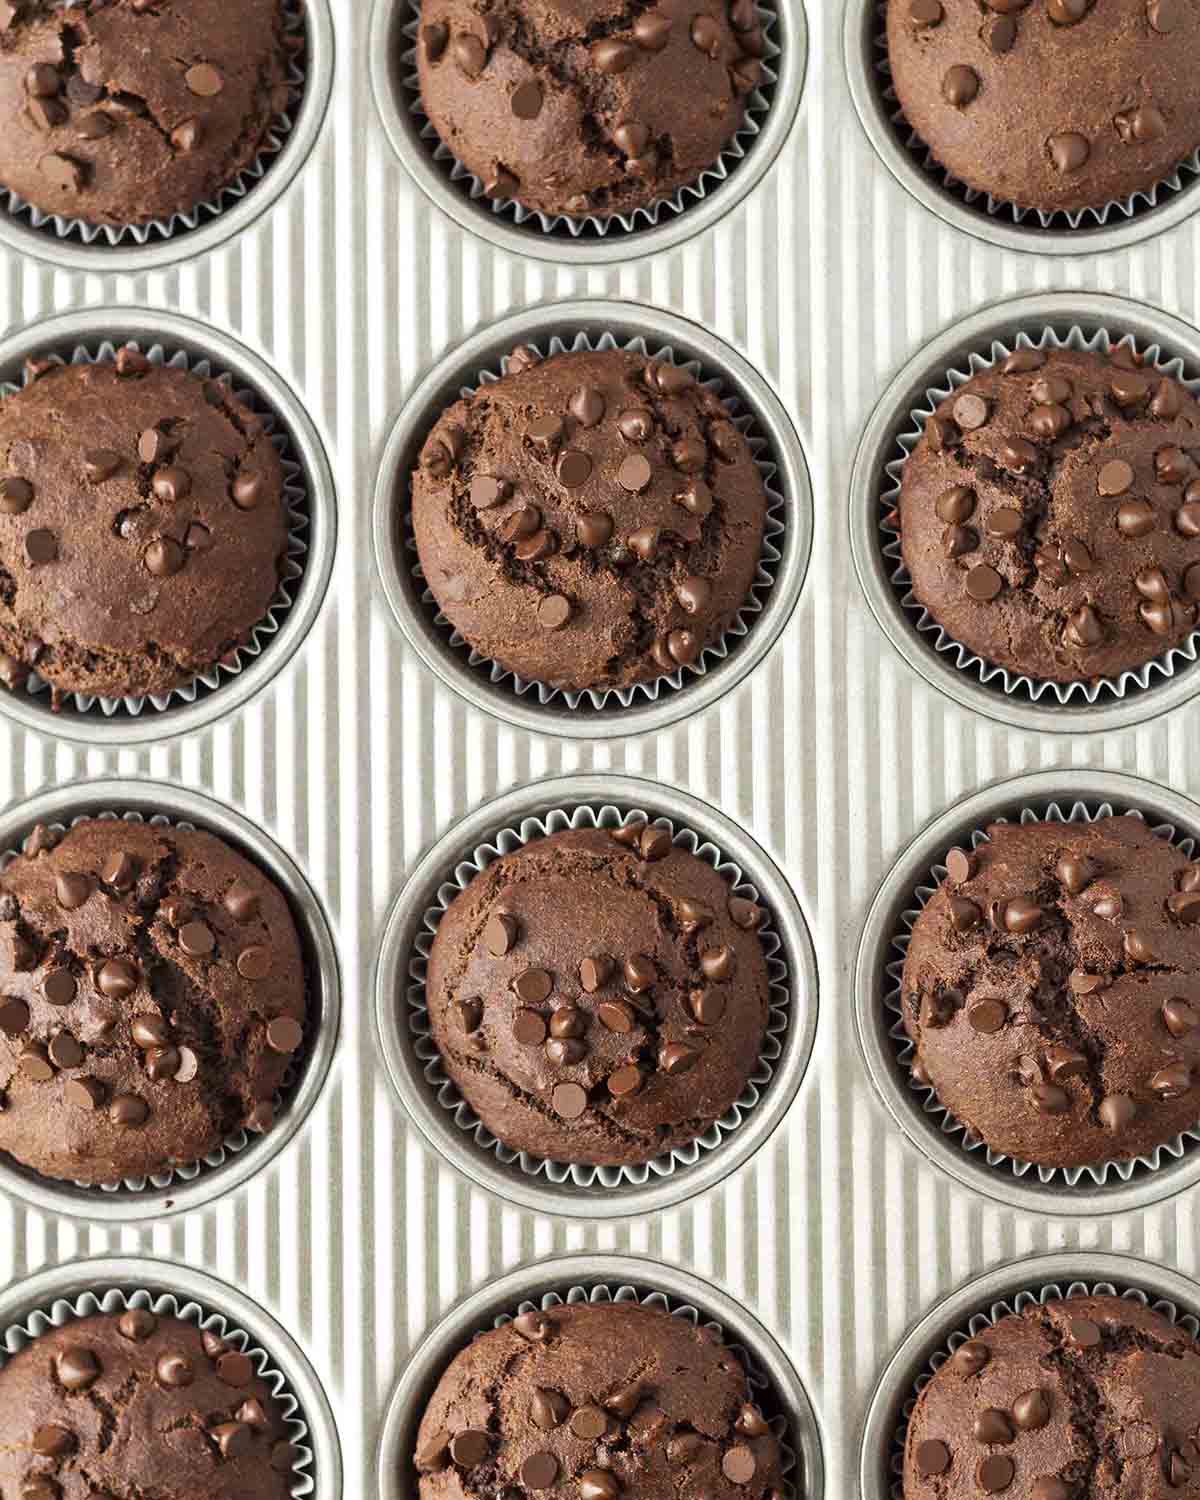 Overhead shot of a muffin pan full of freshly baked vegan gluten-free chocolate banana muffins.